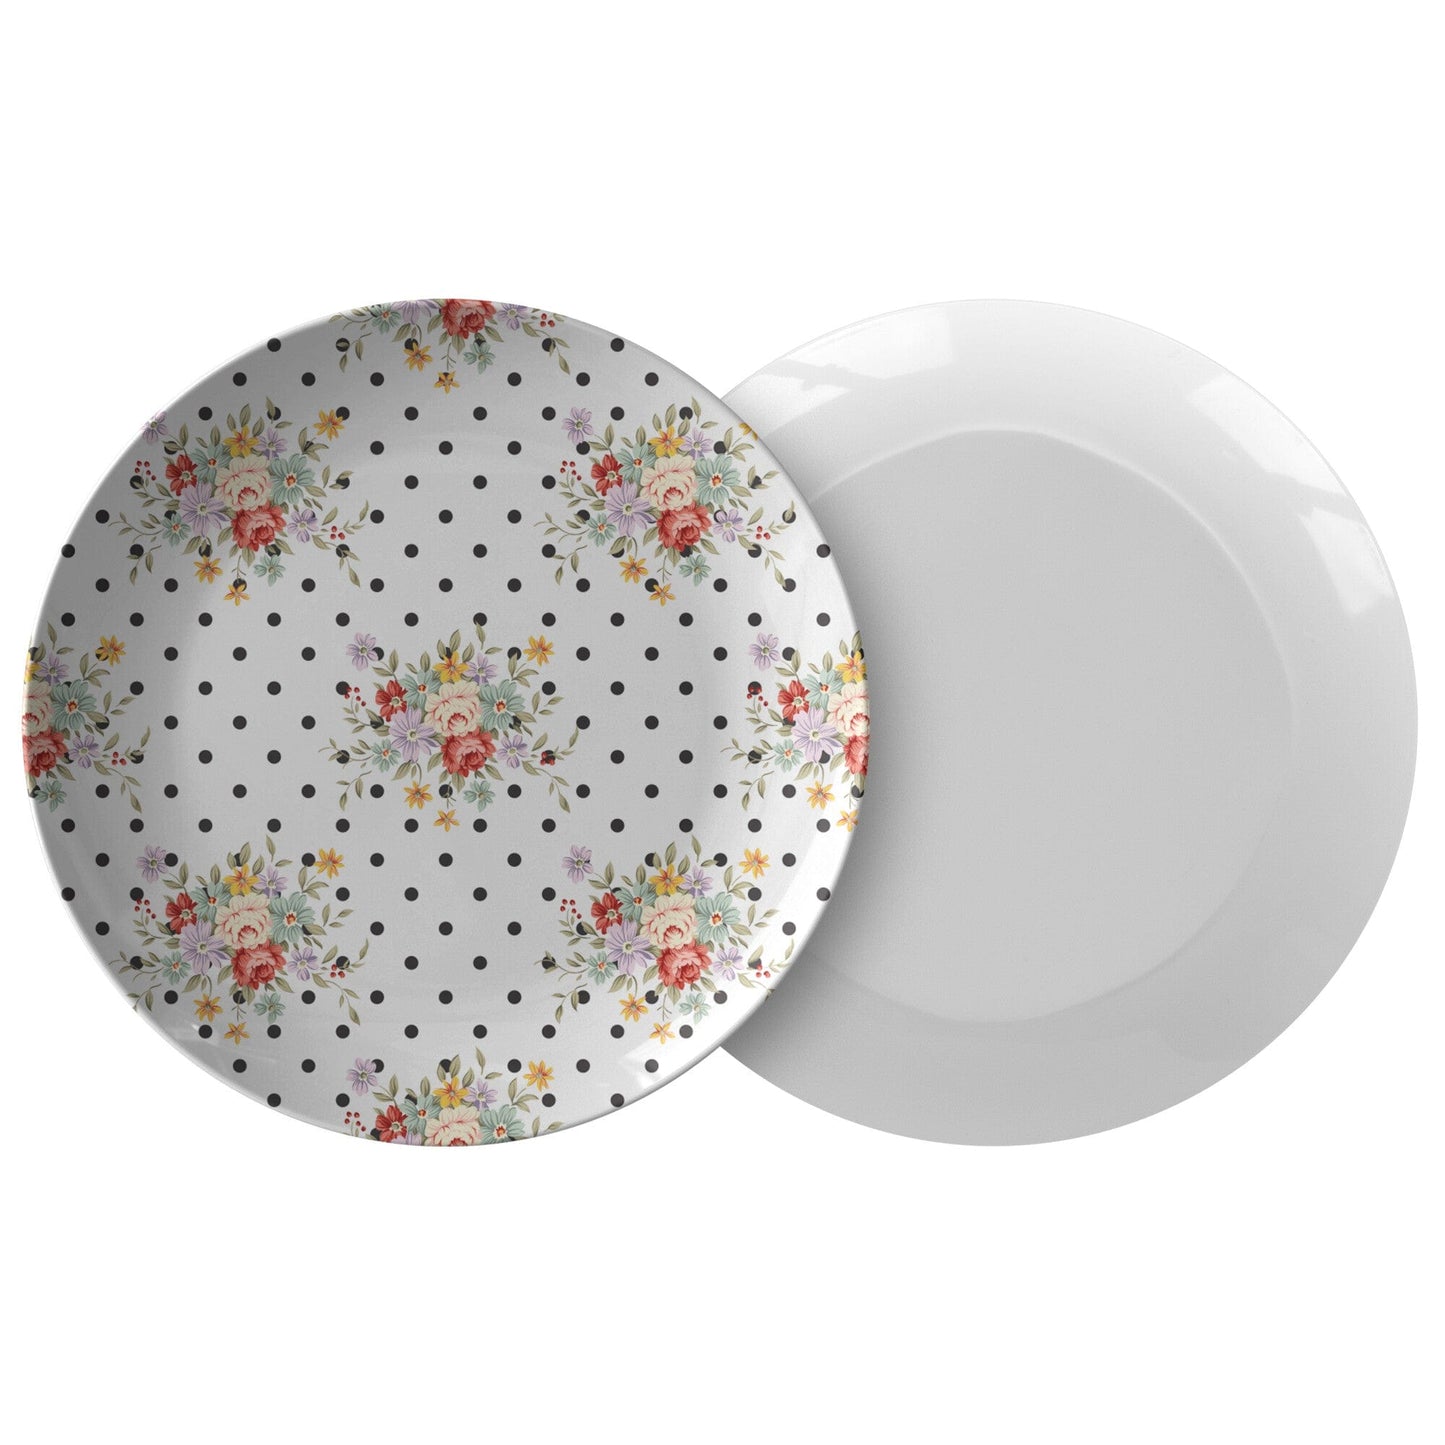 Kate McEnroe New York Dinner Plate in Shabby Chic Polka Dots Floral Plates